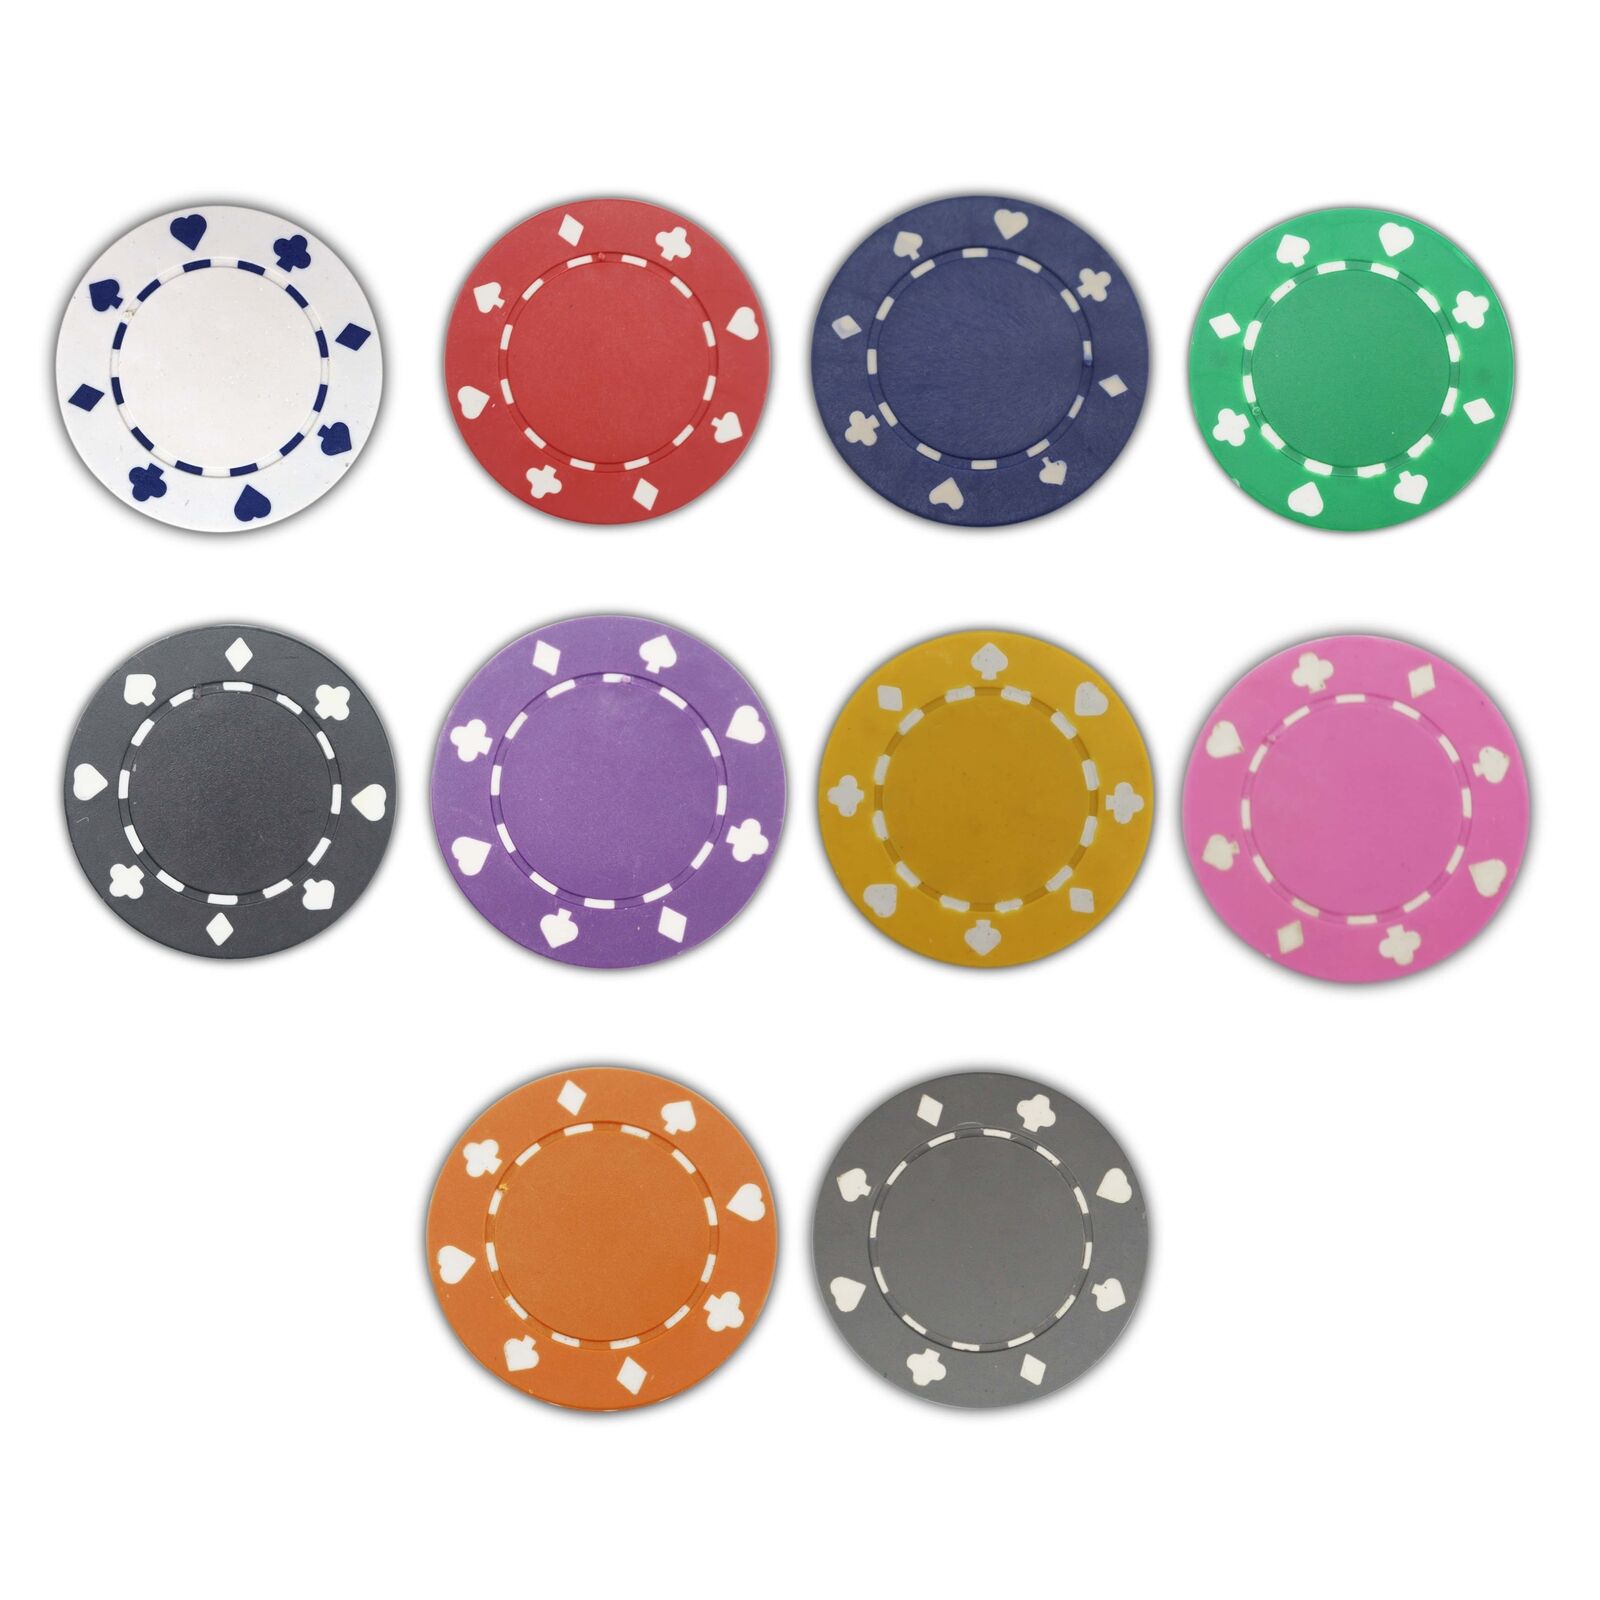 Bulk 800 Suited Edge Poker Chips - 11.5 gram - Pick Your Colors